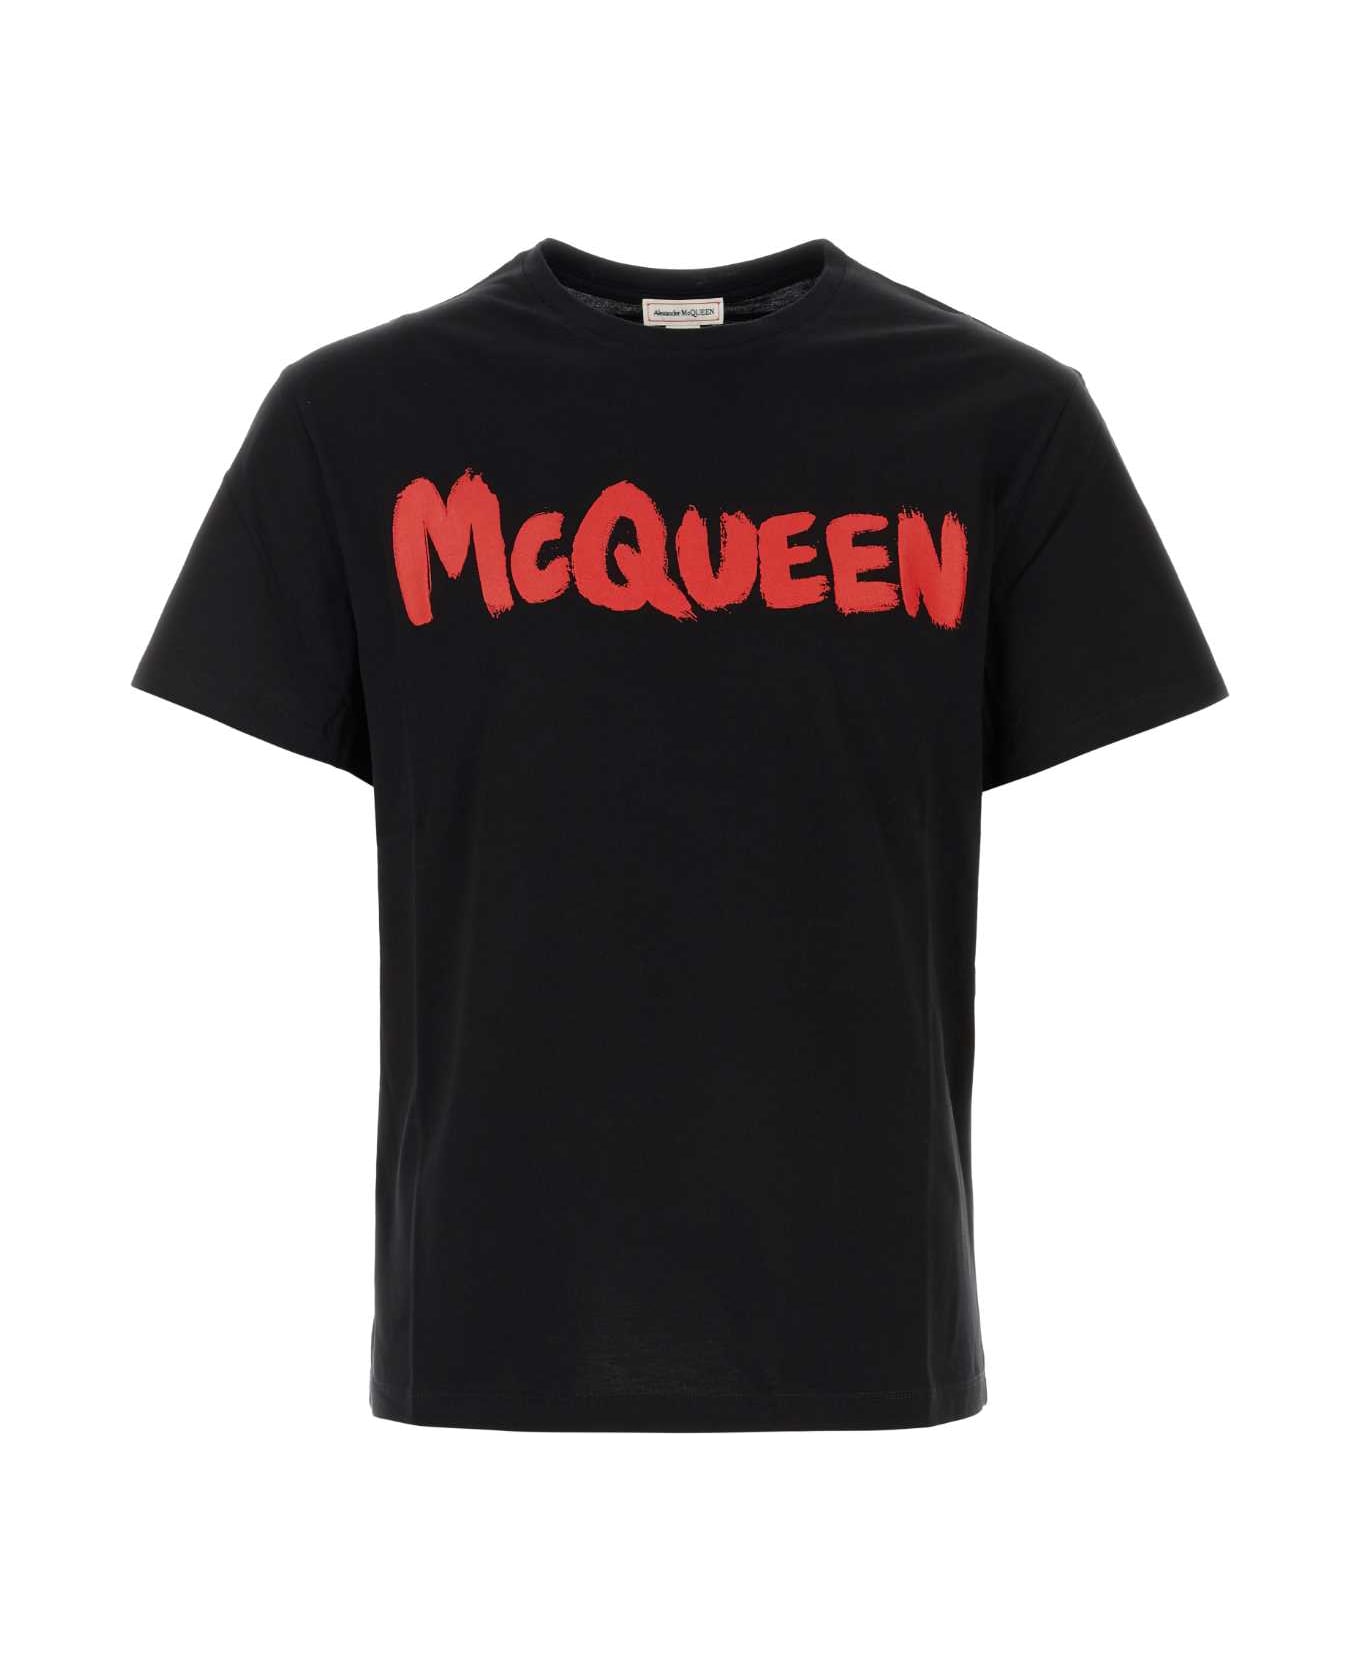 Alexander McQueen Black Cotton T-shirt - BLACKRED